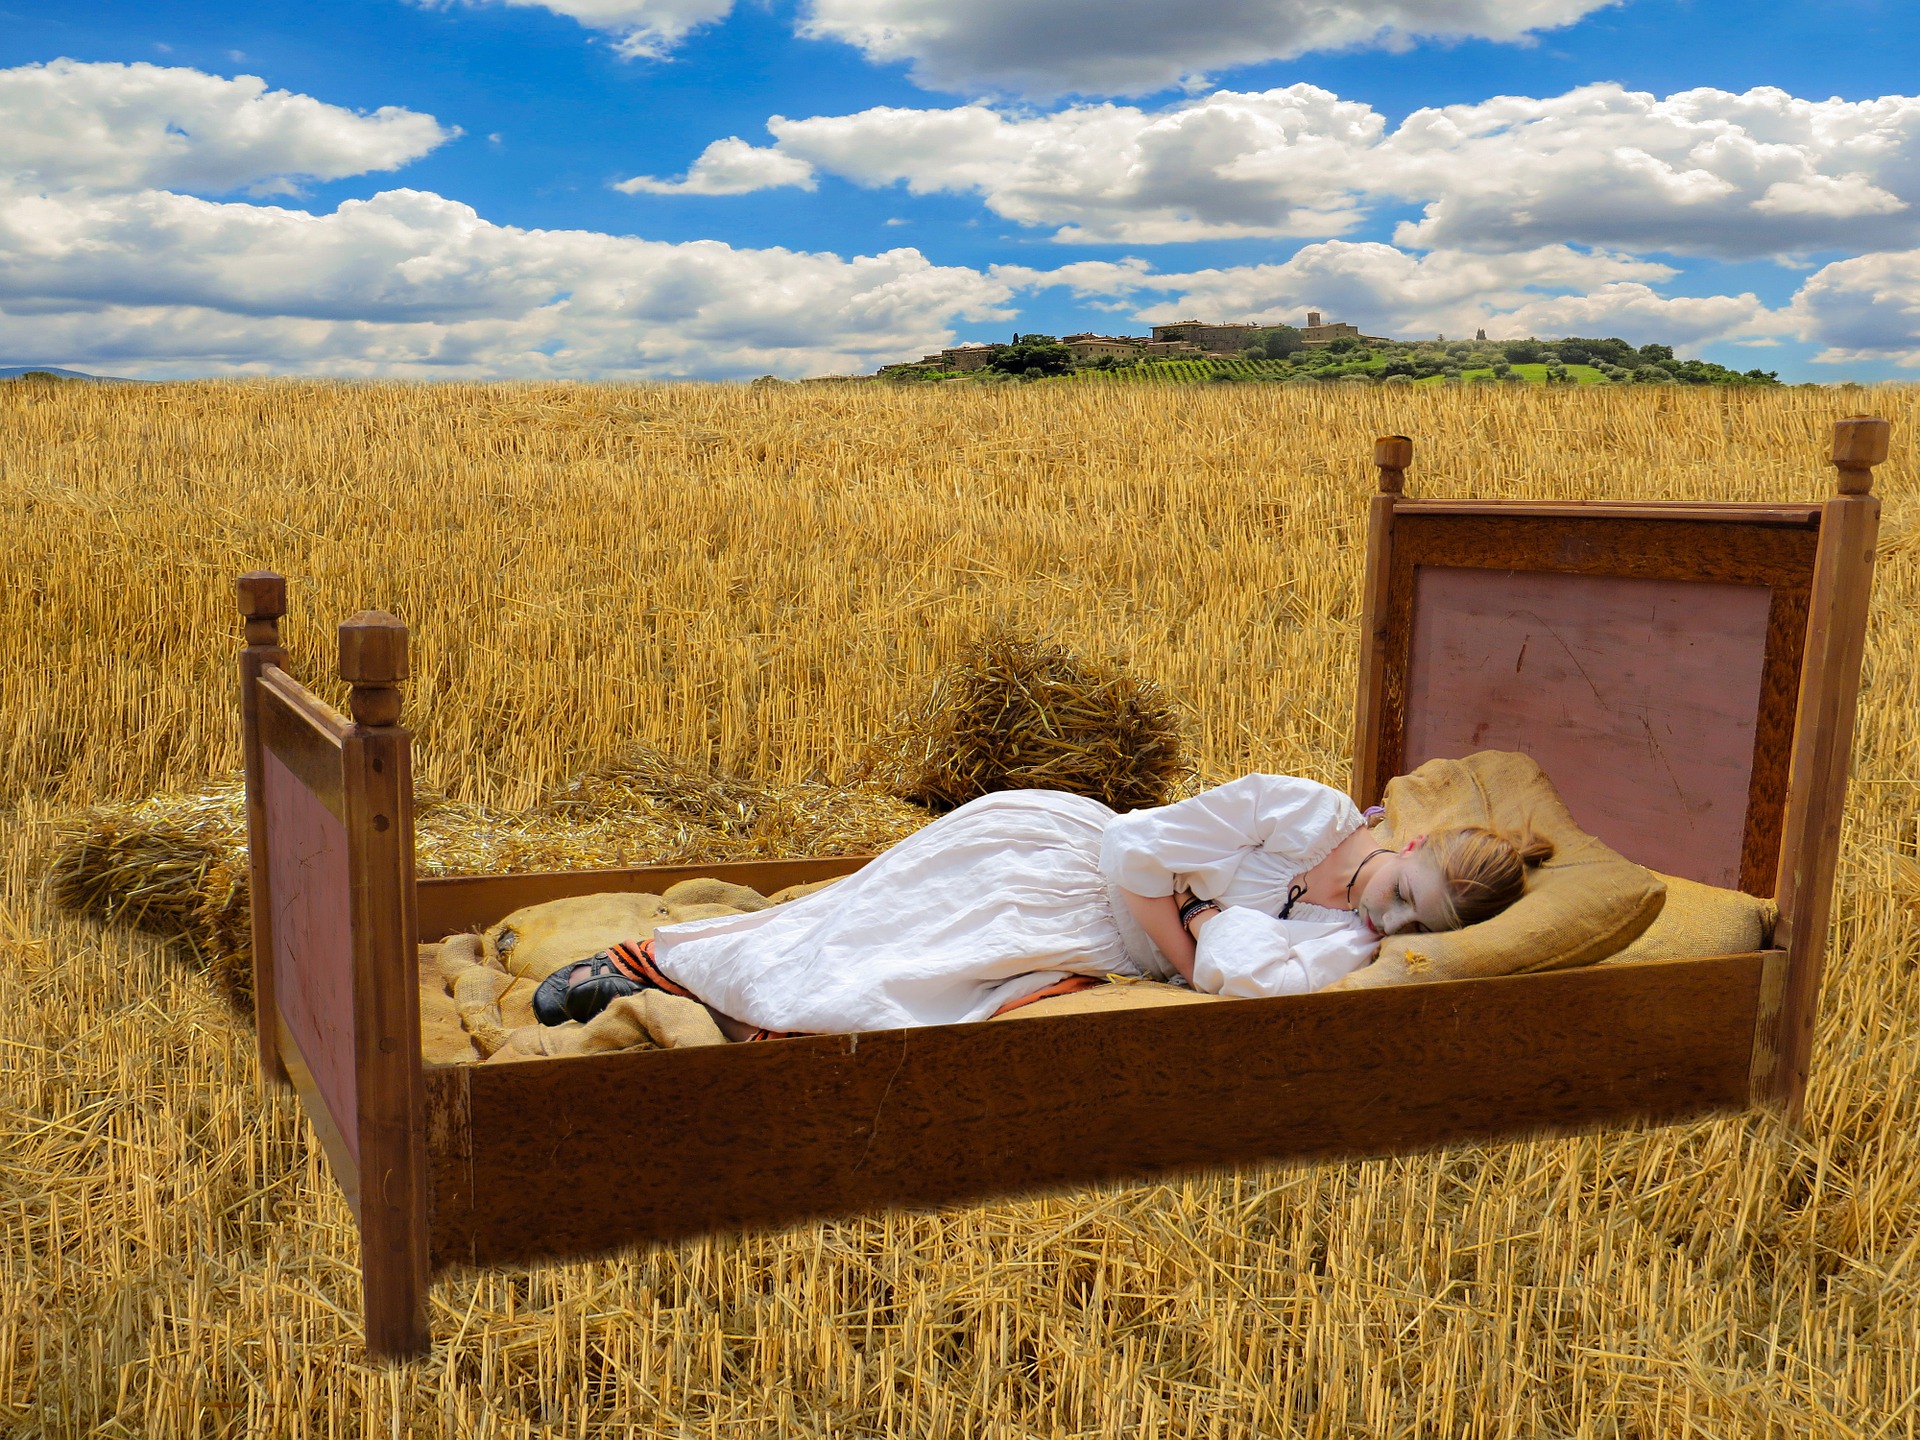 Sleeping in the Corn Field, Activity, Bed, Corn, Crop, HQ Photo